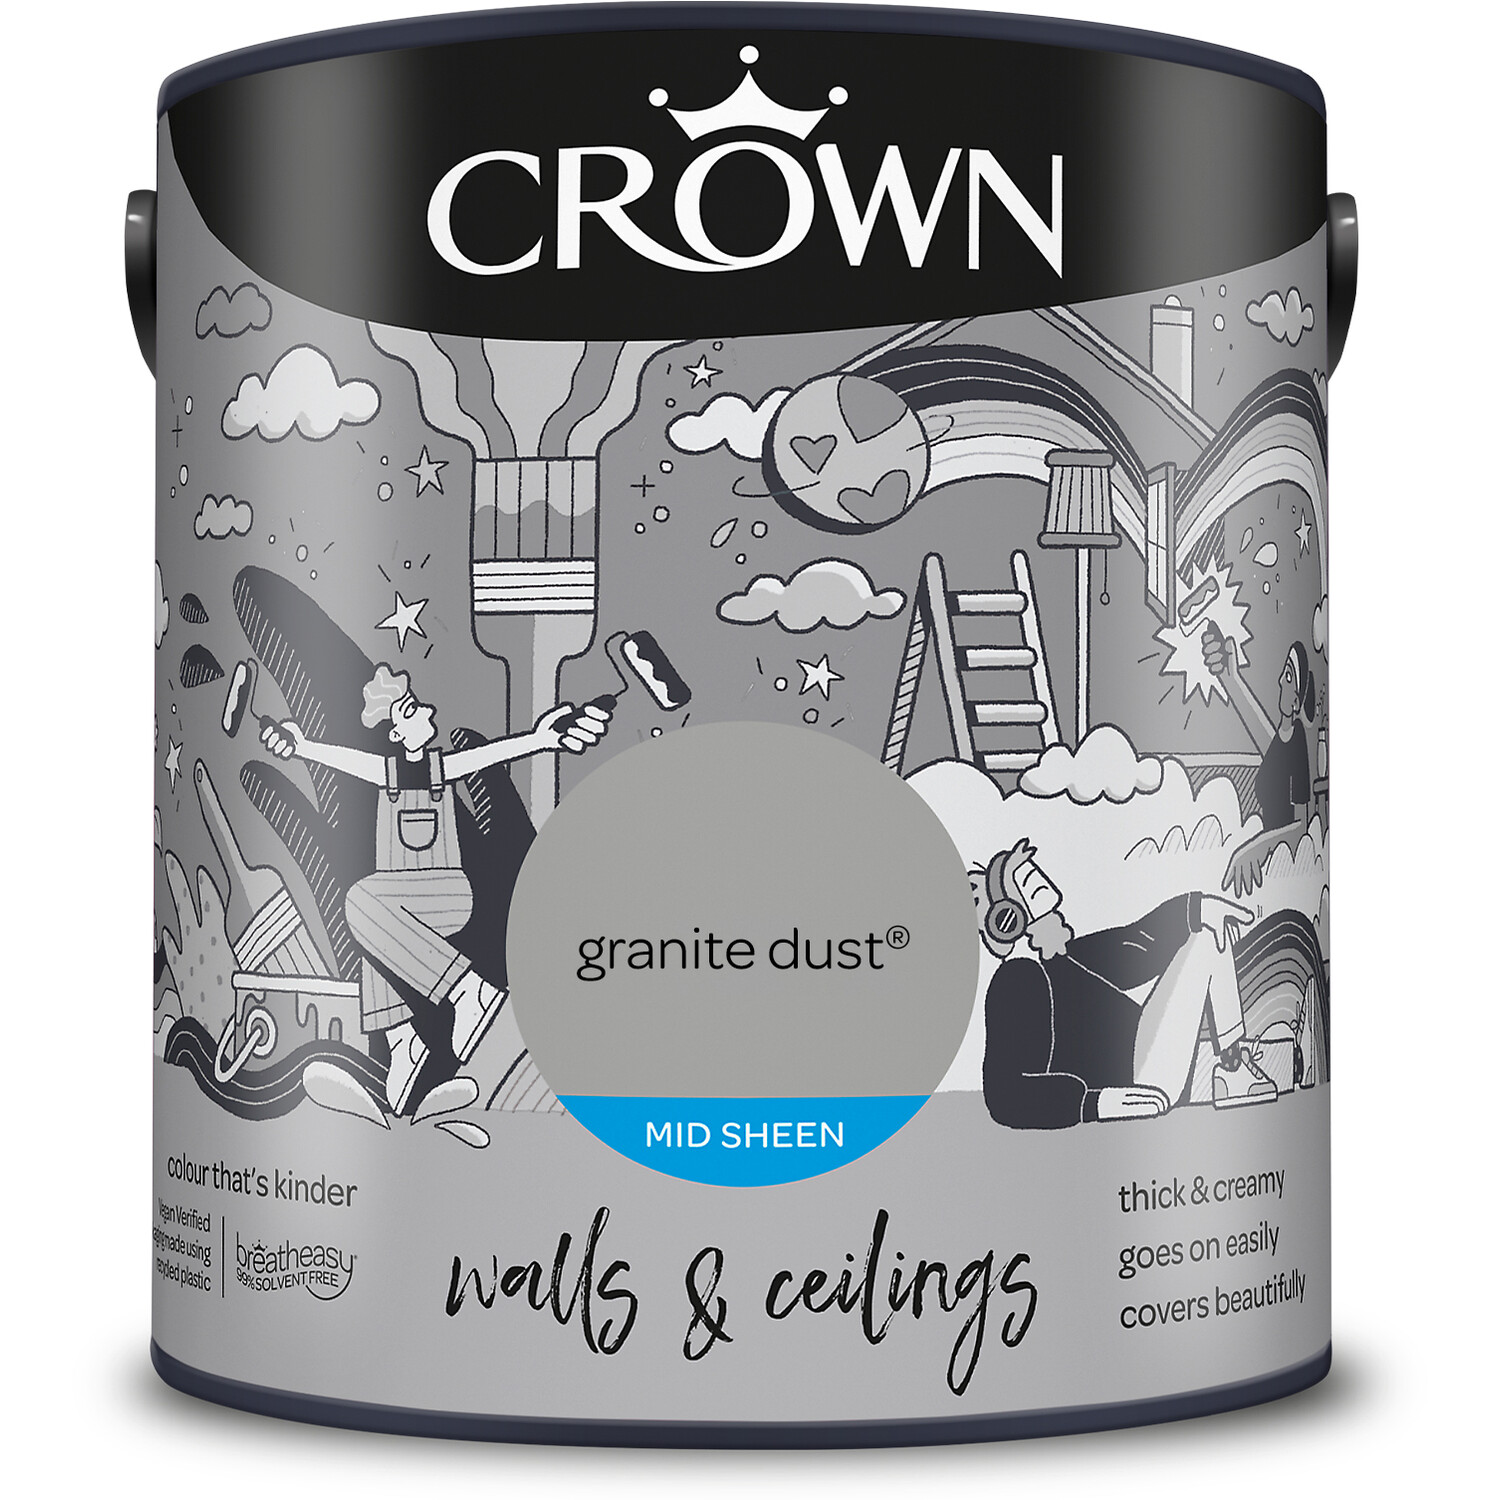 Crown Walls & Ceilings Granite Dust Mid Sheen Emulsion Paint 2.5L Image 2